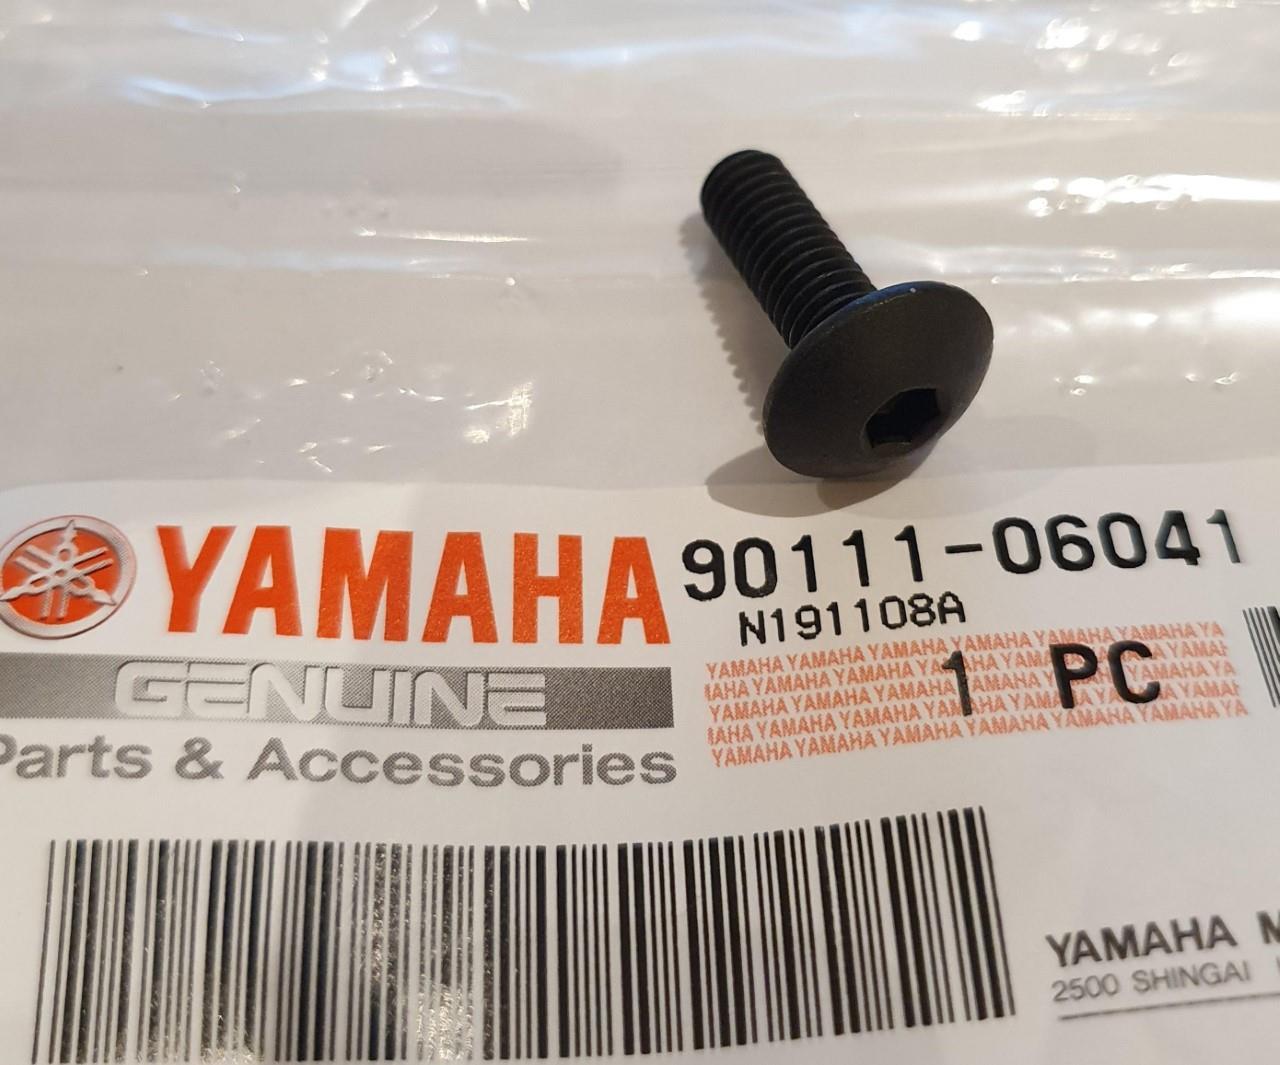 Yamaha OEM Umbrako bolt 6 x 20mm, sort